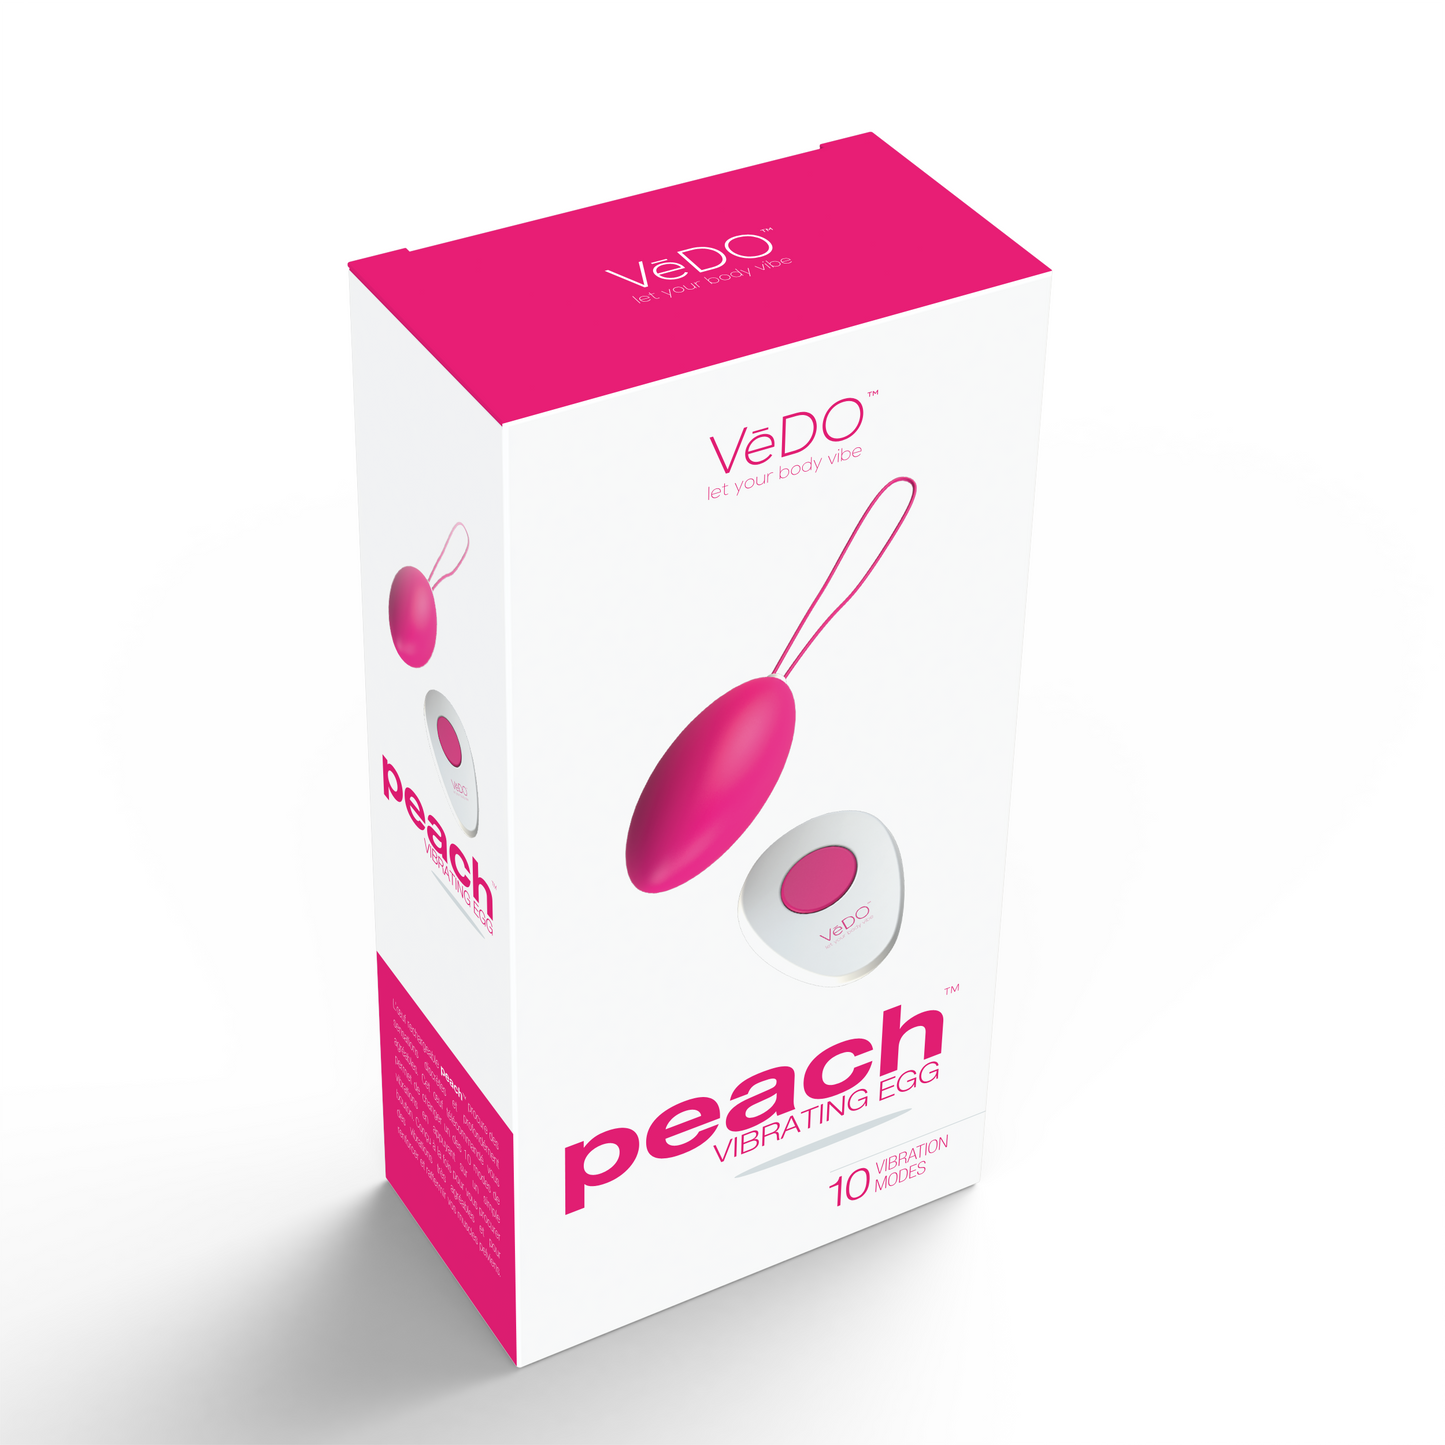 Peach Vibrating Egg - Foxy Pink VI-B0309